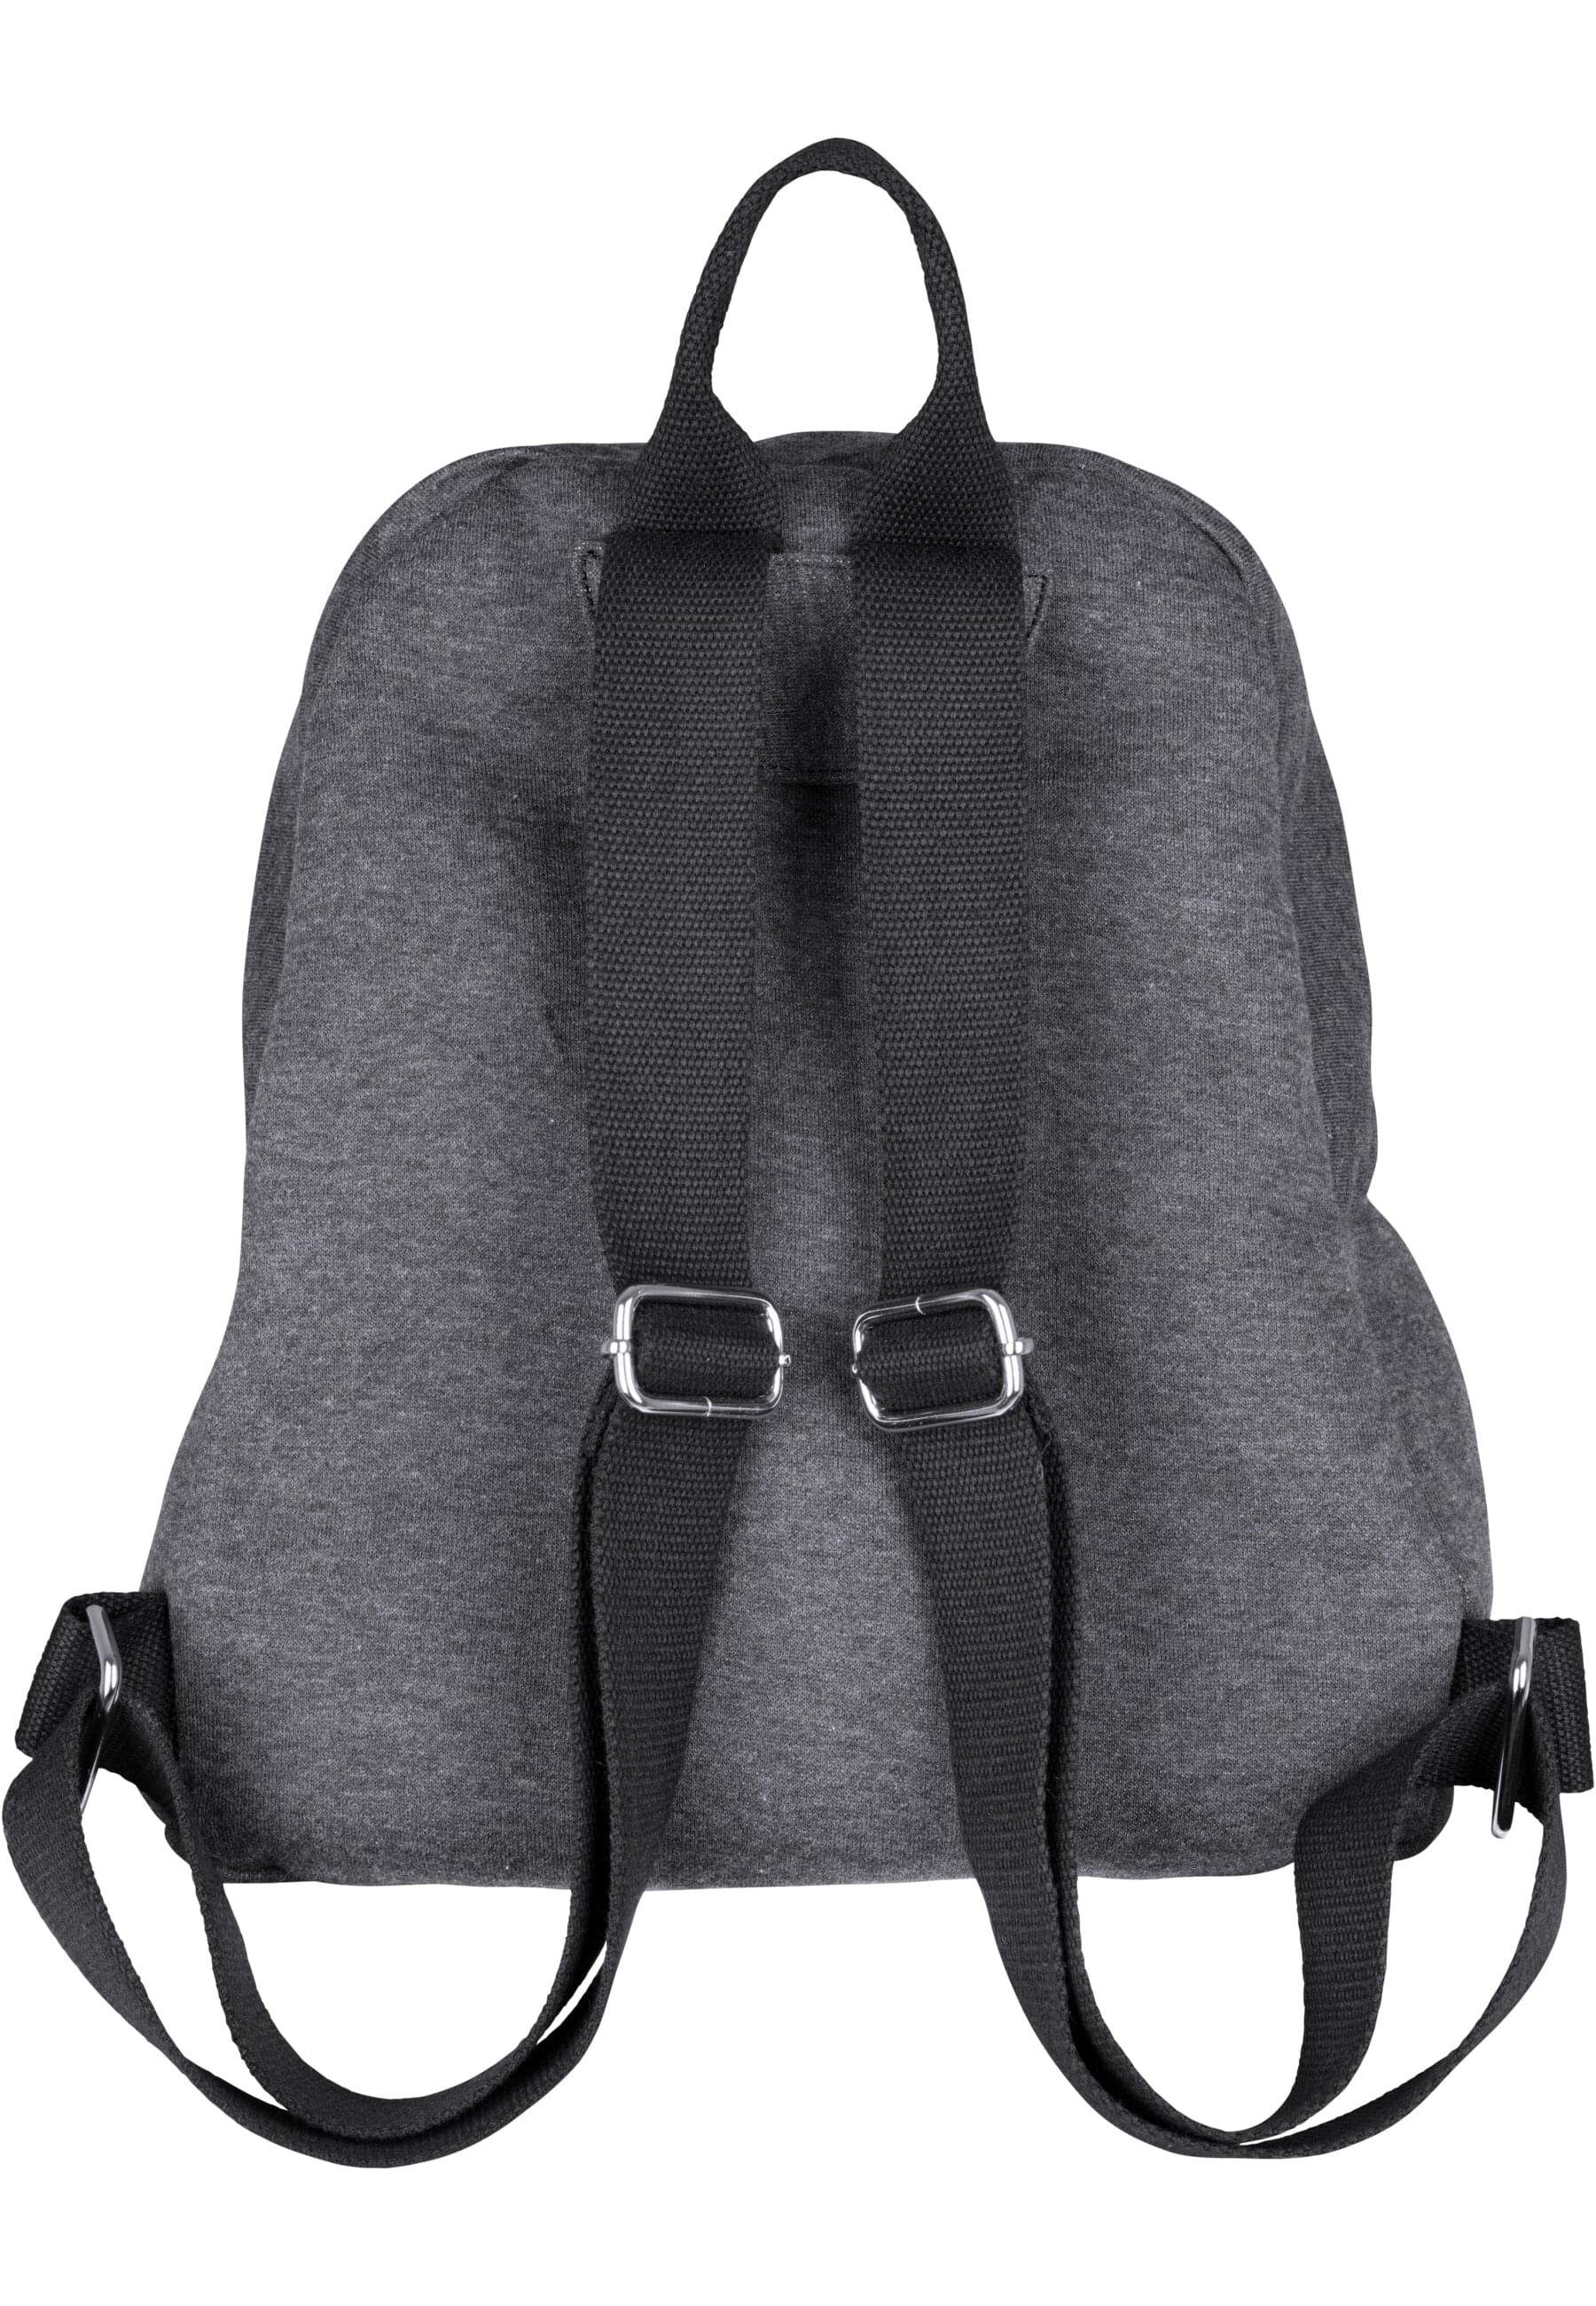 URBAN CLASSICS Rucksack Unisex Backpack Sweat charcoal/black